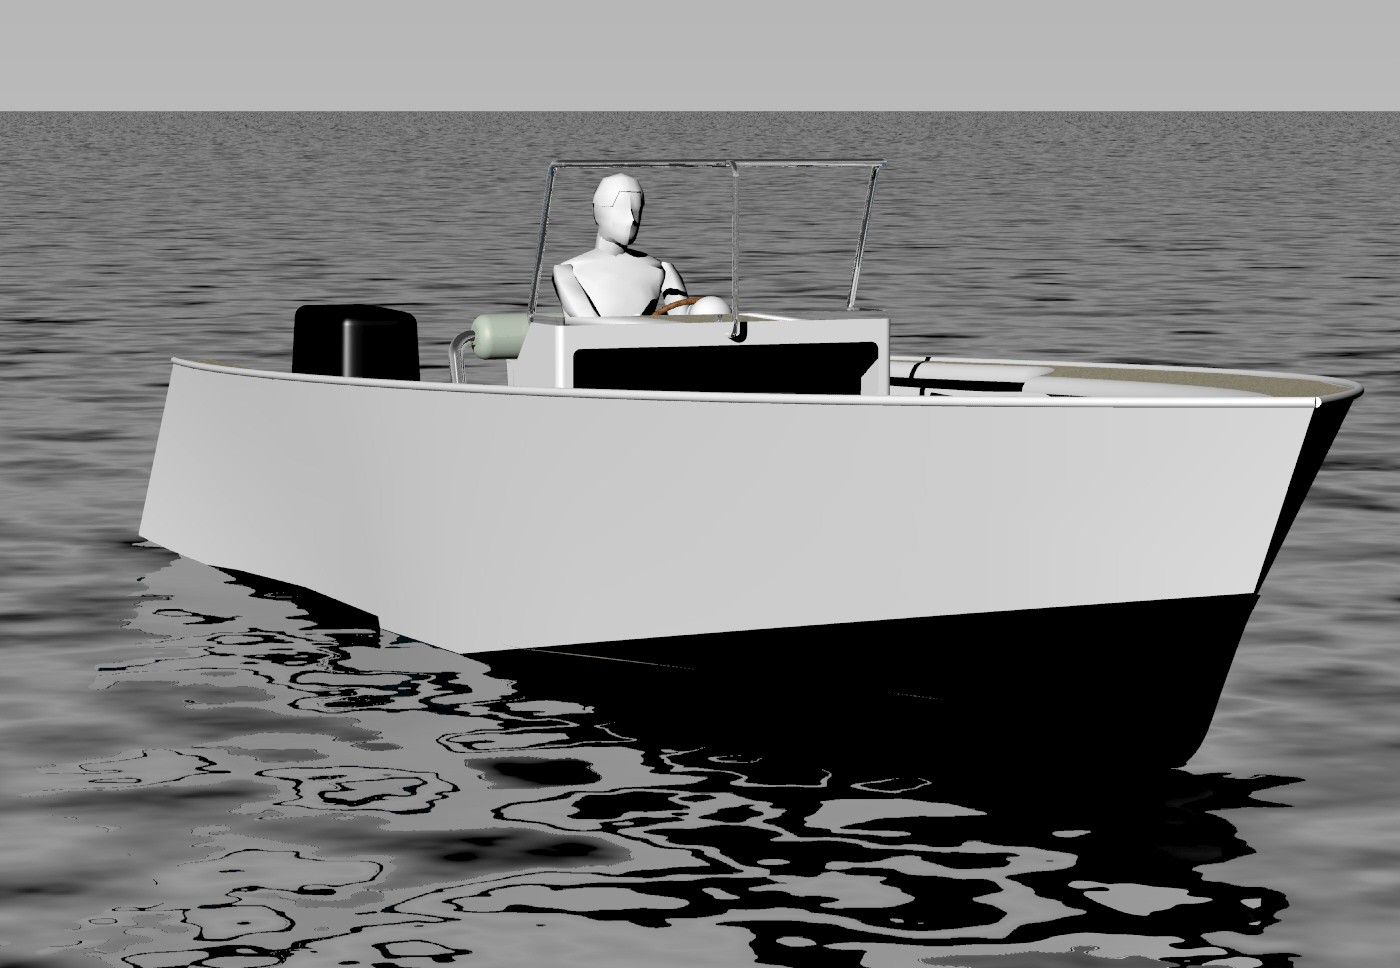 tanton yacht design: simple, single step hydroplane.